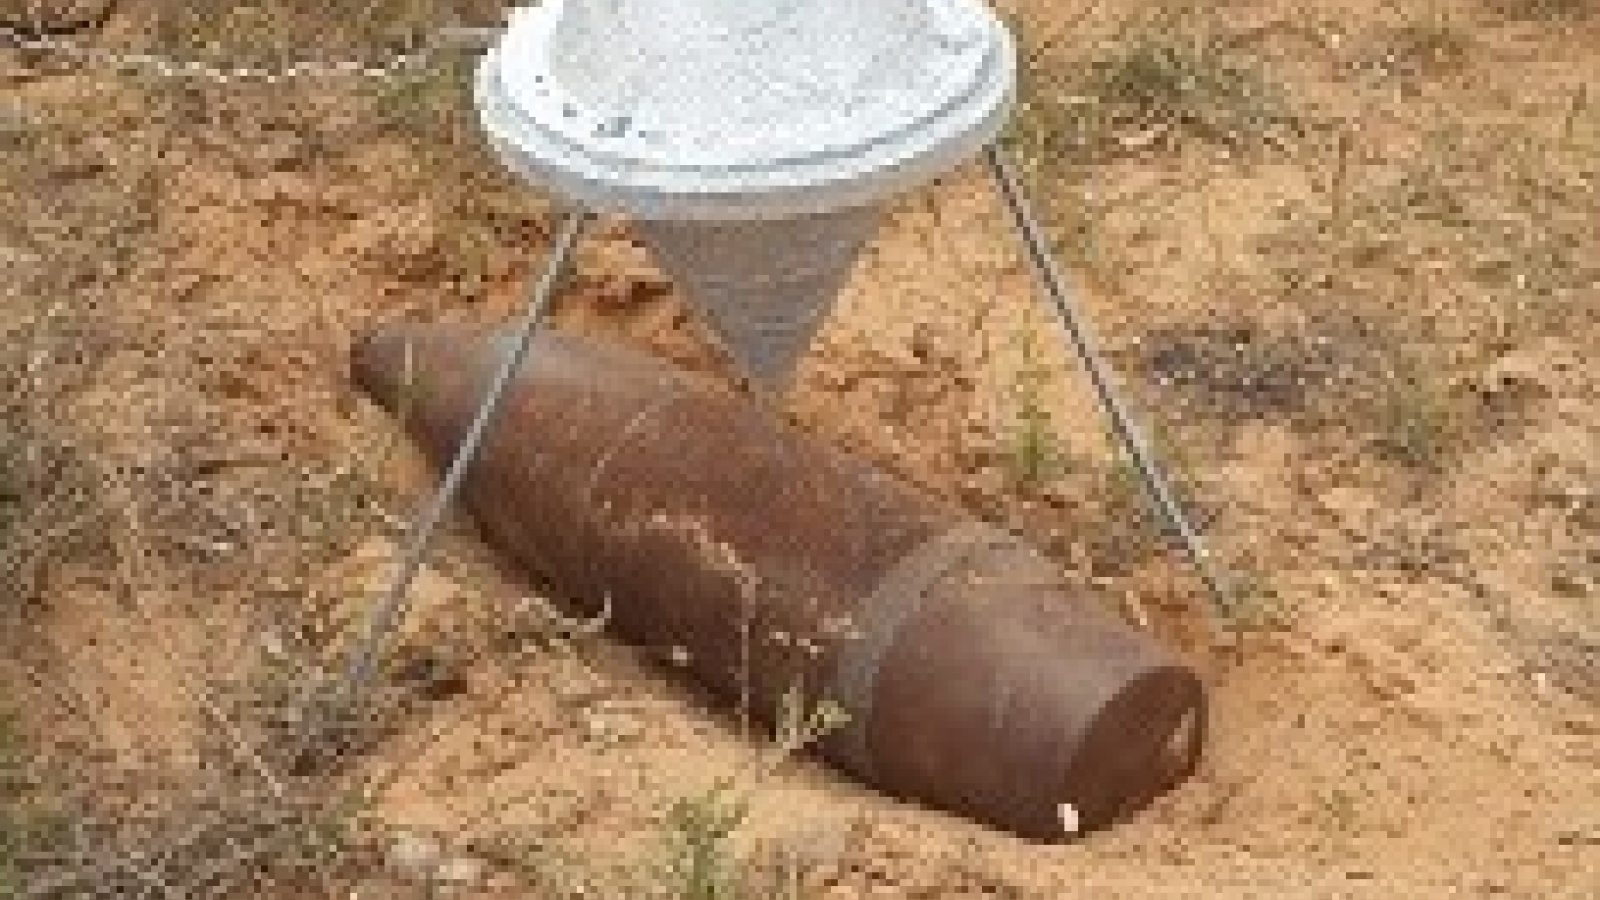 Unexploded ammunition measuring 105mm in diameter 